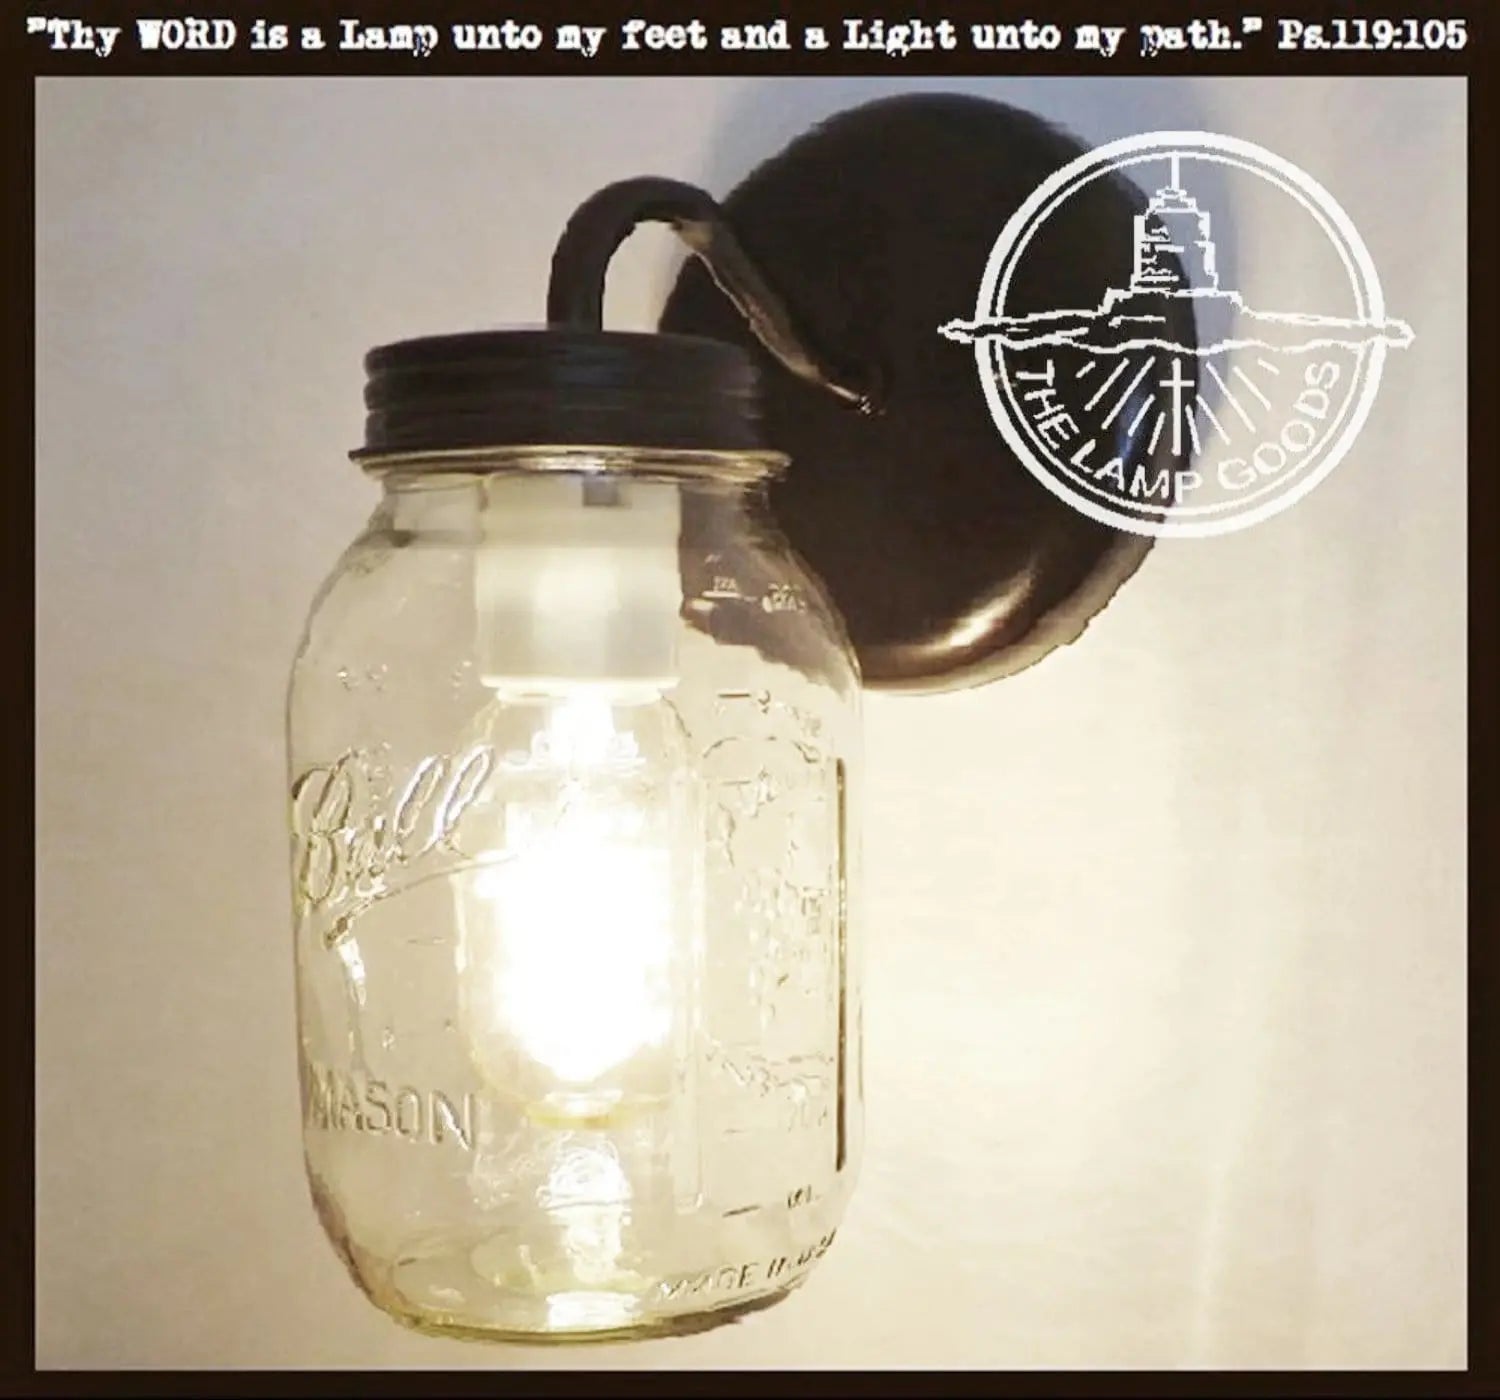 Mason Jar Wall SCONCE Lighting Fixture New Quart - The Lamp Goods